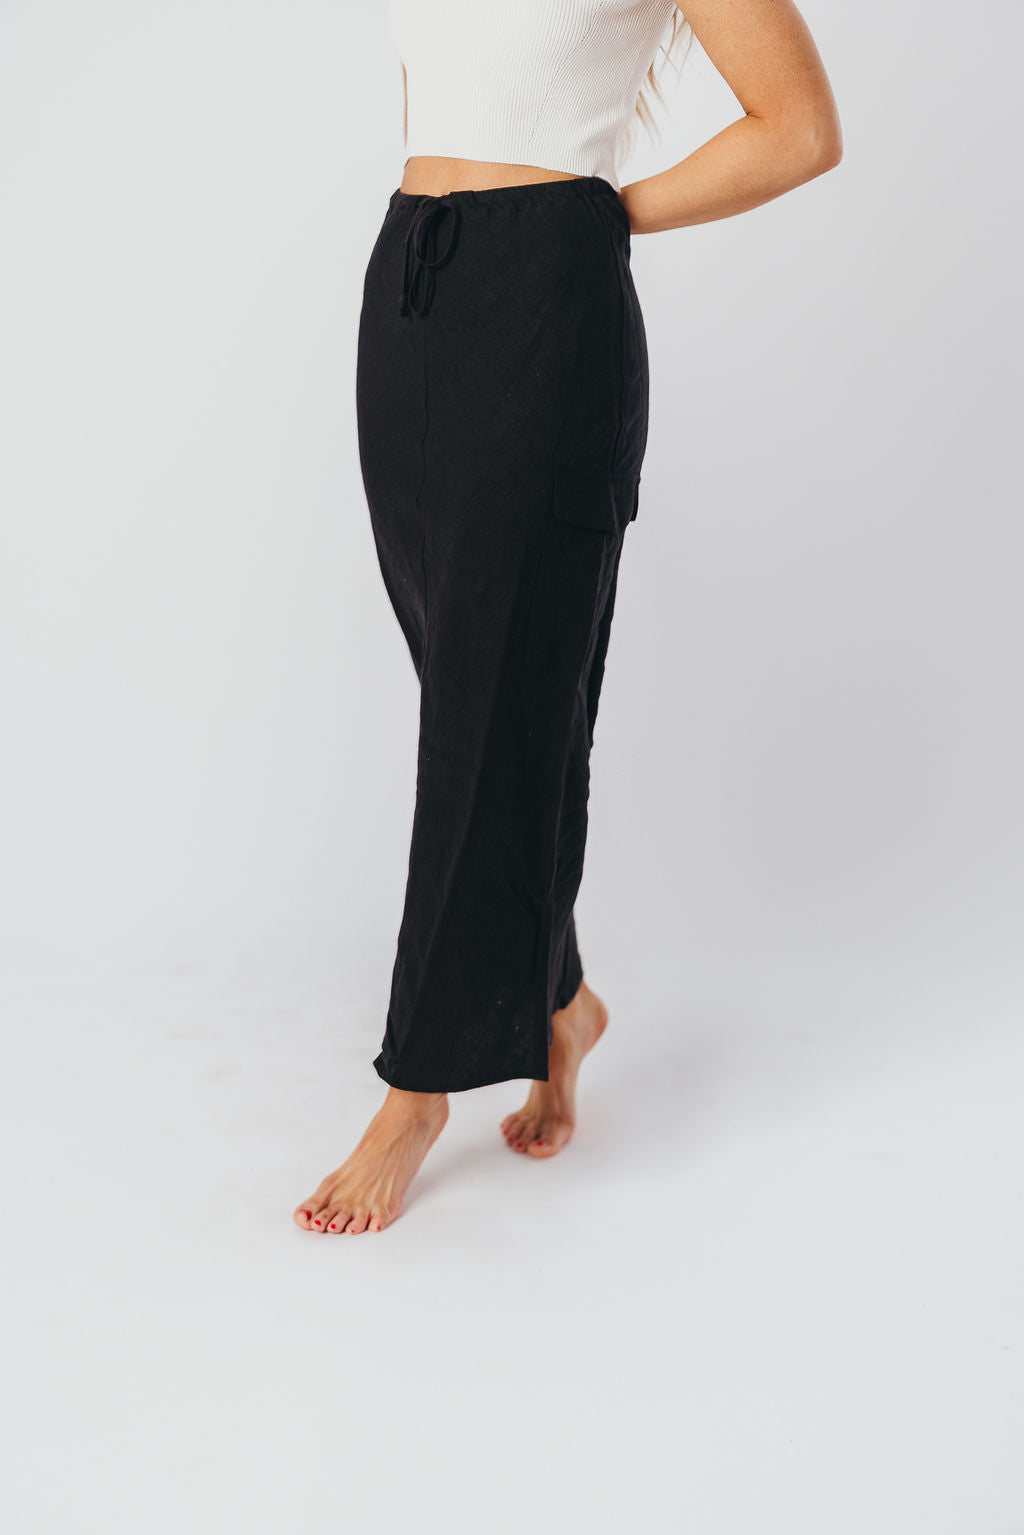 Farrah Linen Maxi Skirt in Black